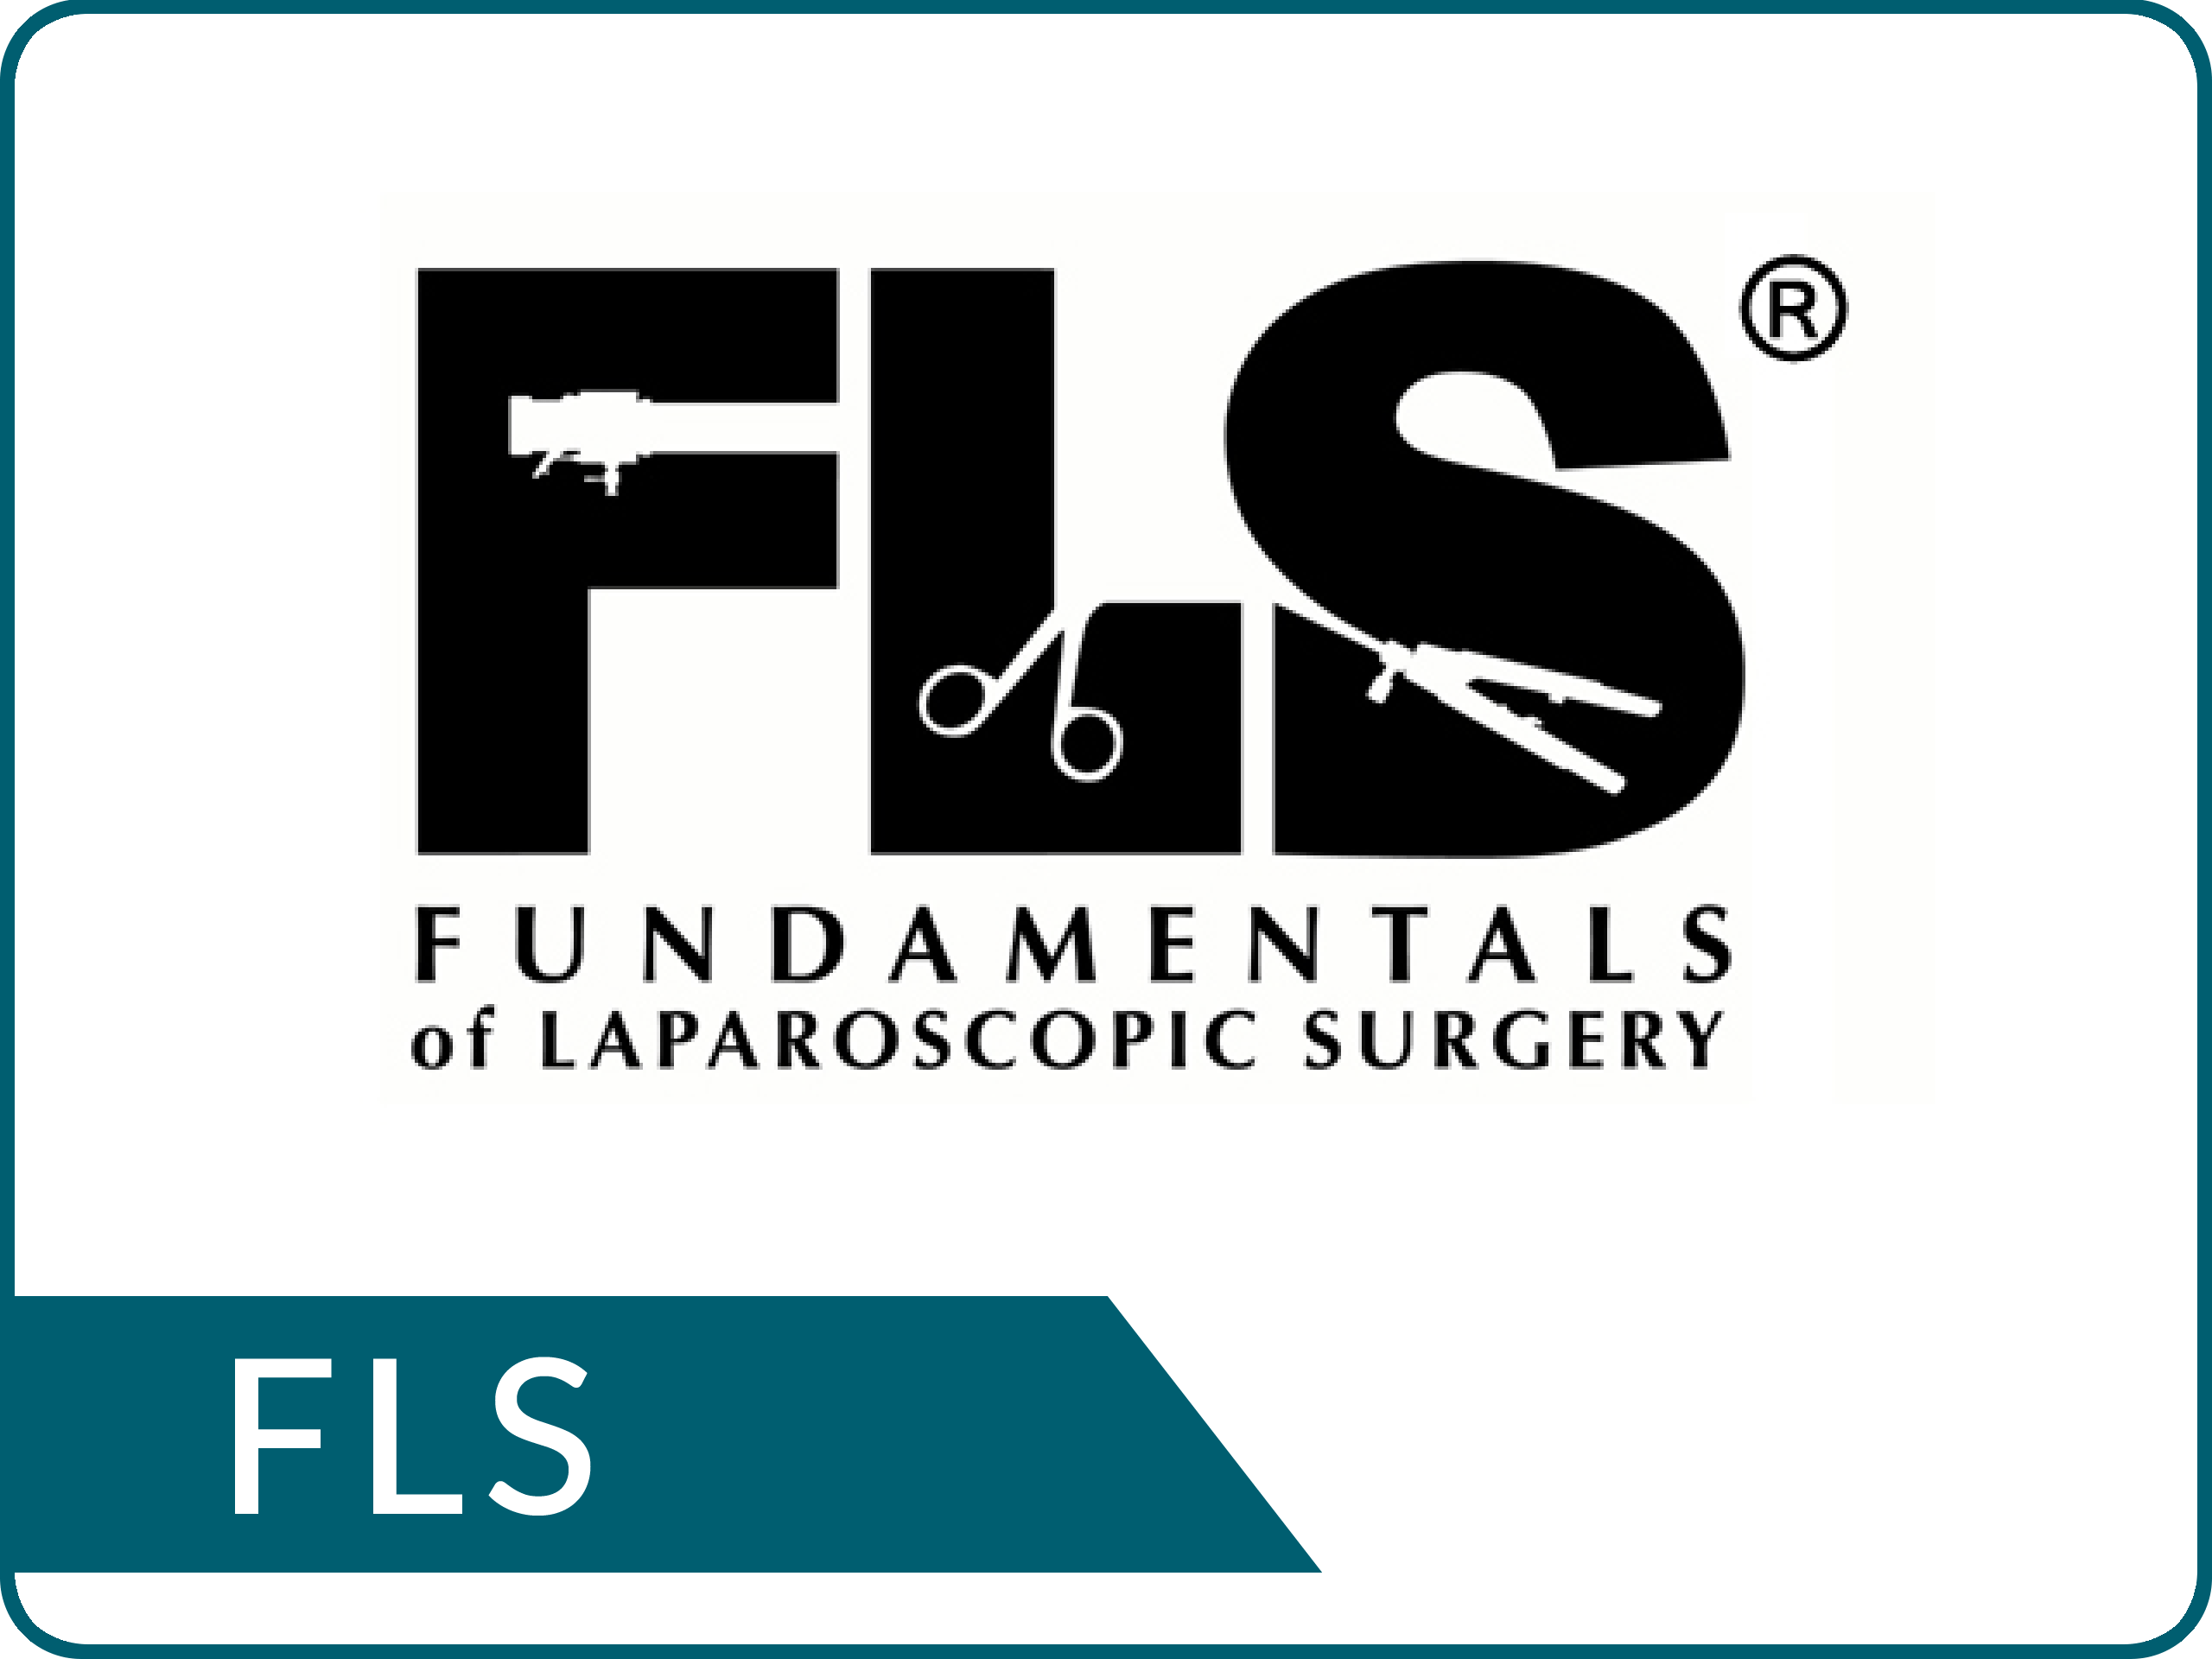 FUNDAMENTALS OF LAPAROSCOPIC SURGERY (FLS)